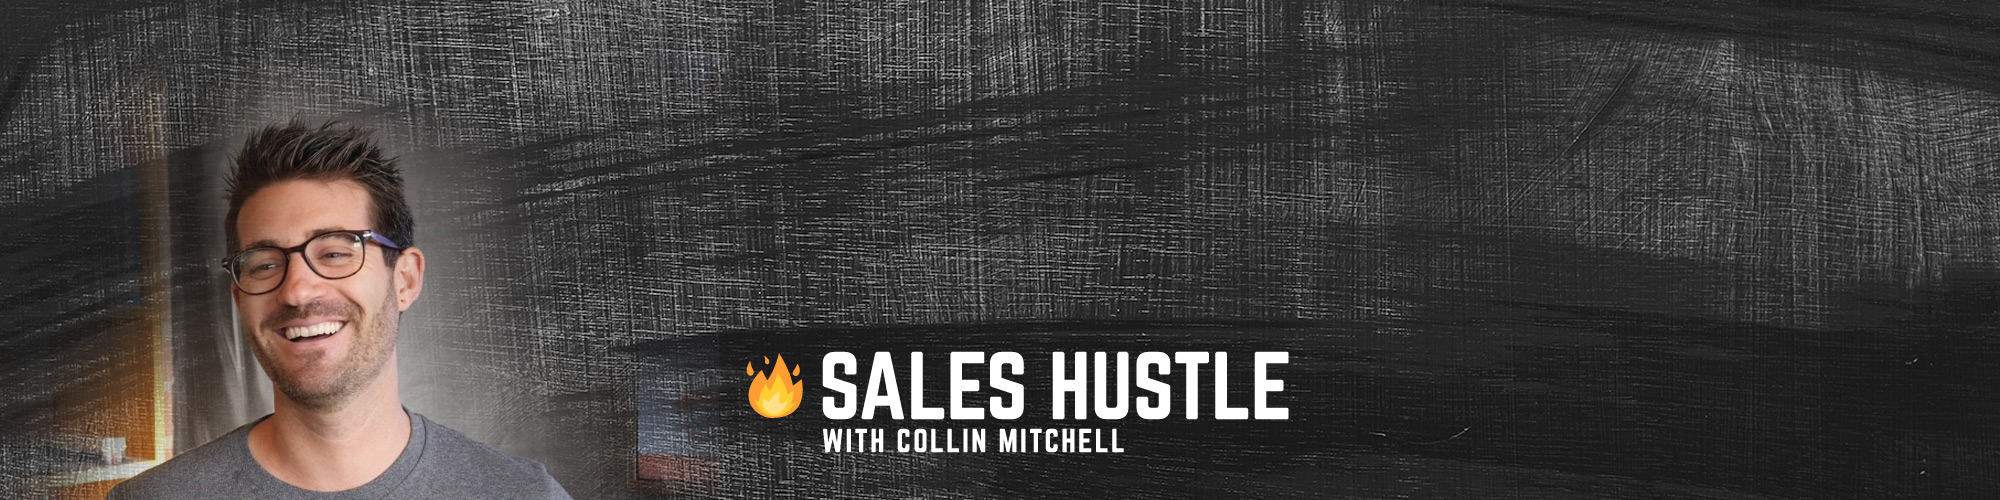 Sales Hustle